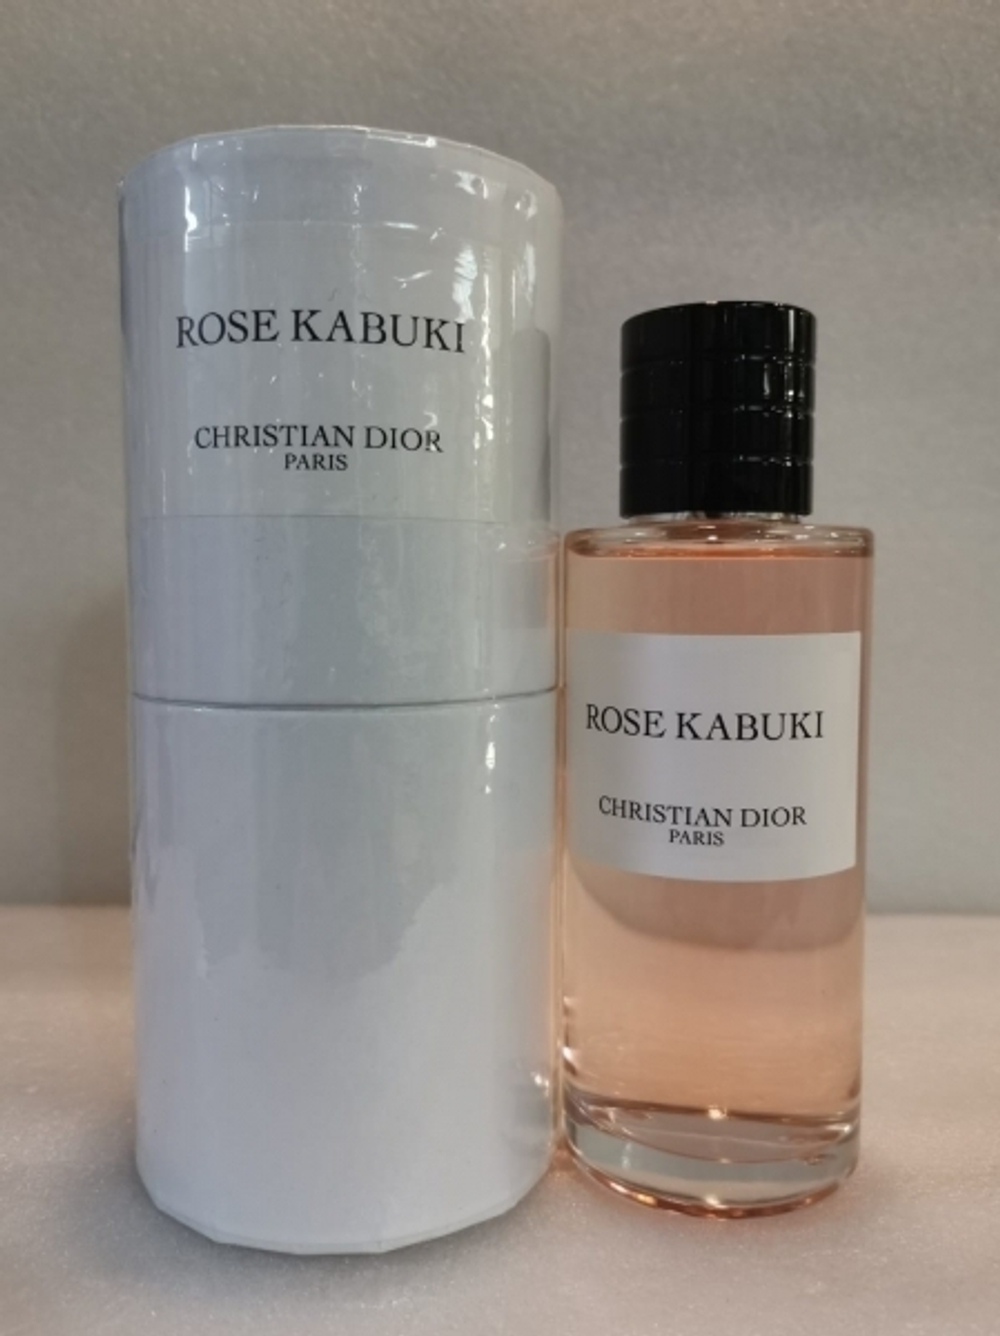 Christian Dior Rose Kabuki 125 ml (duty free парфюмерия)